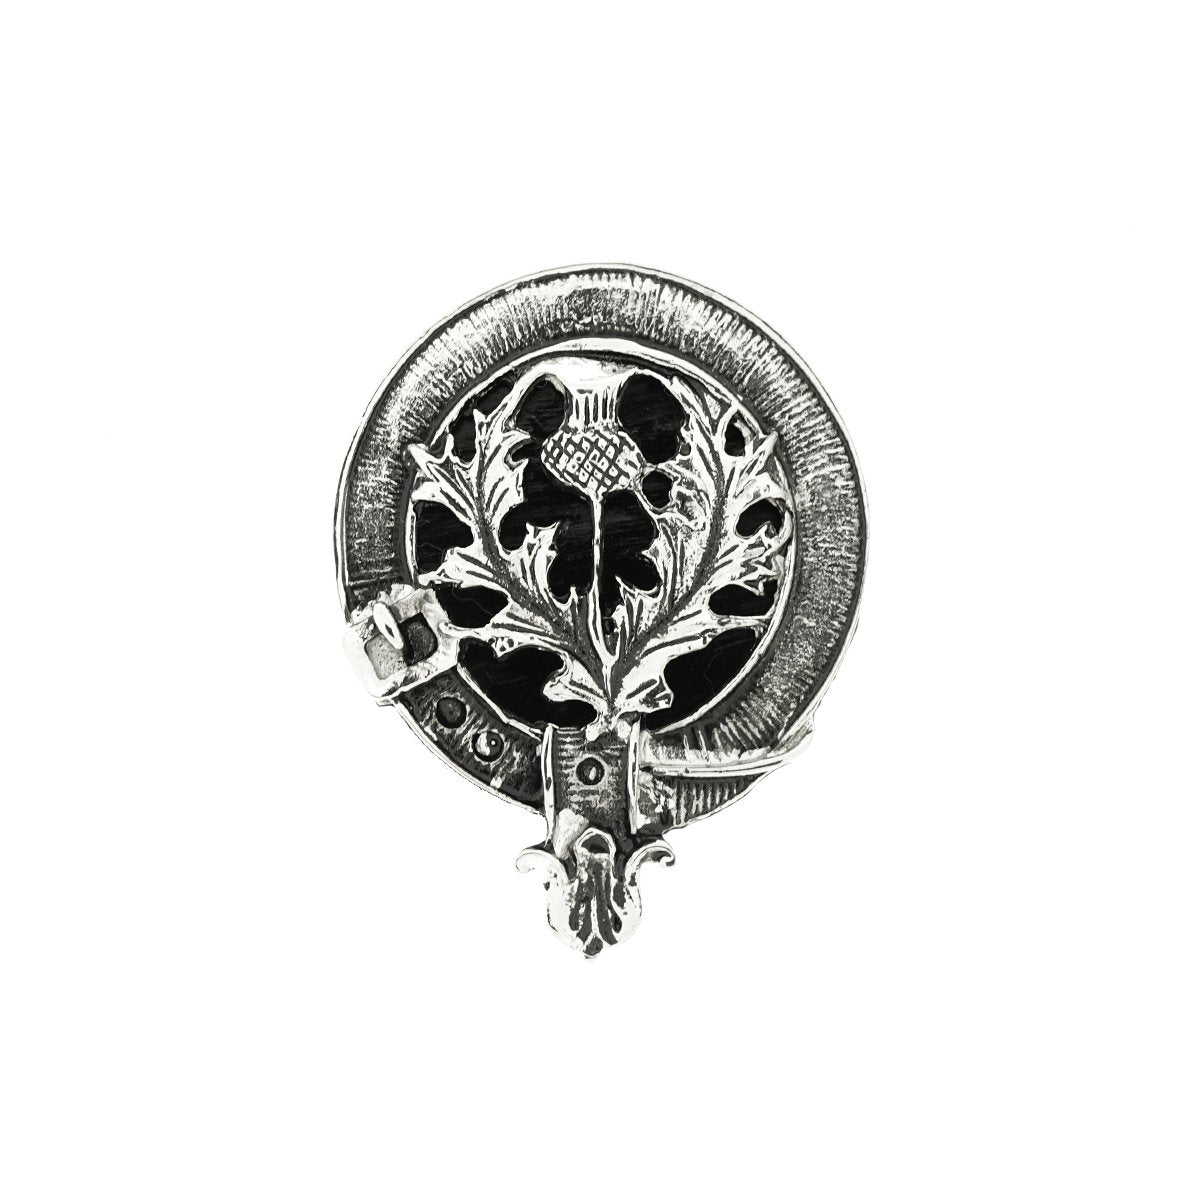 Scottish Thistle Kilt Pin Made in Scotland by Art Pewter (CKP113)